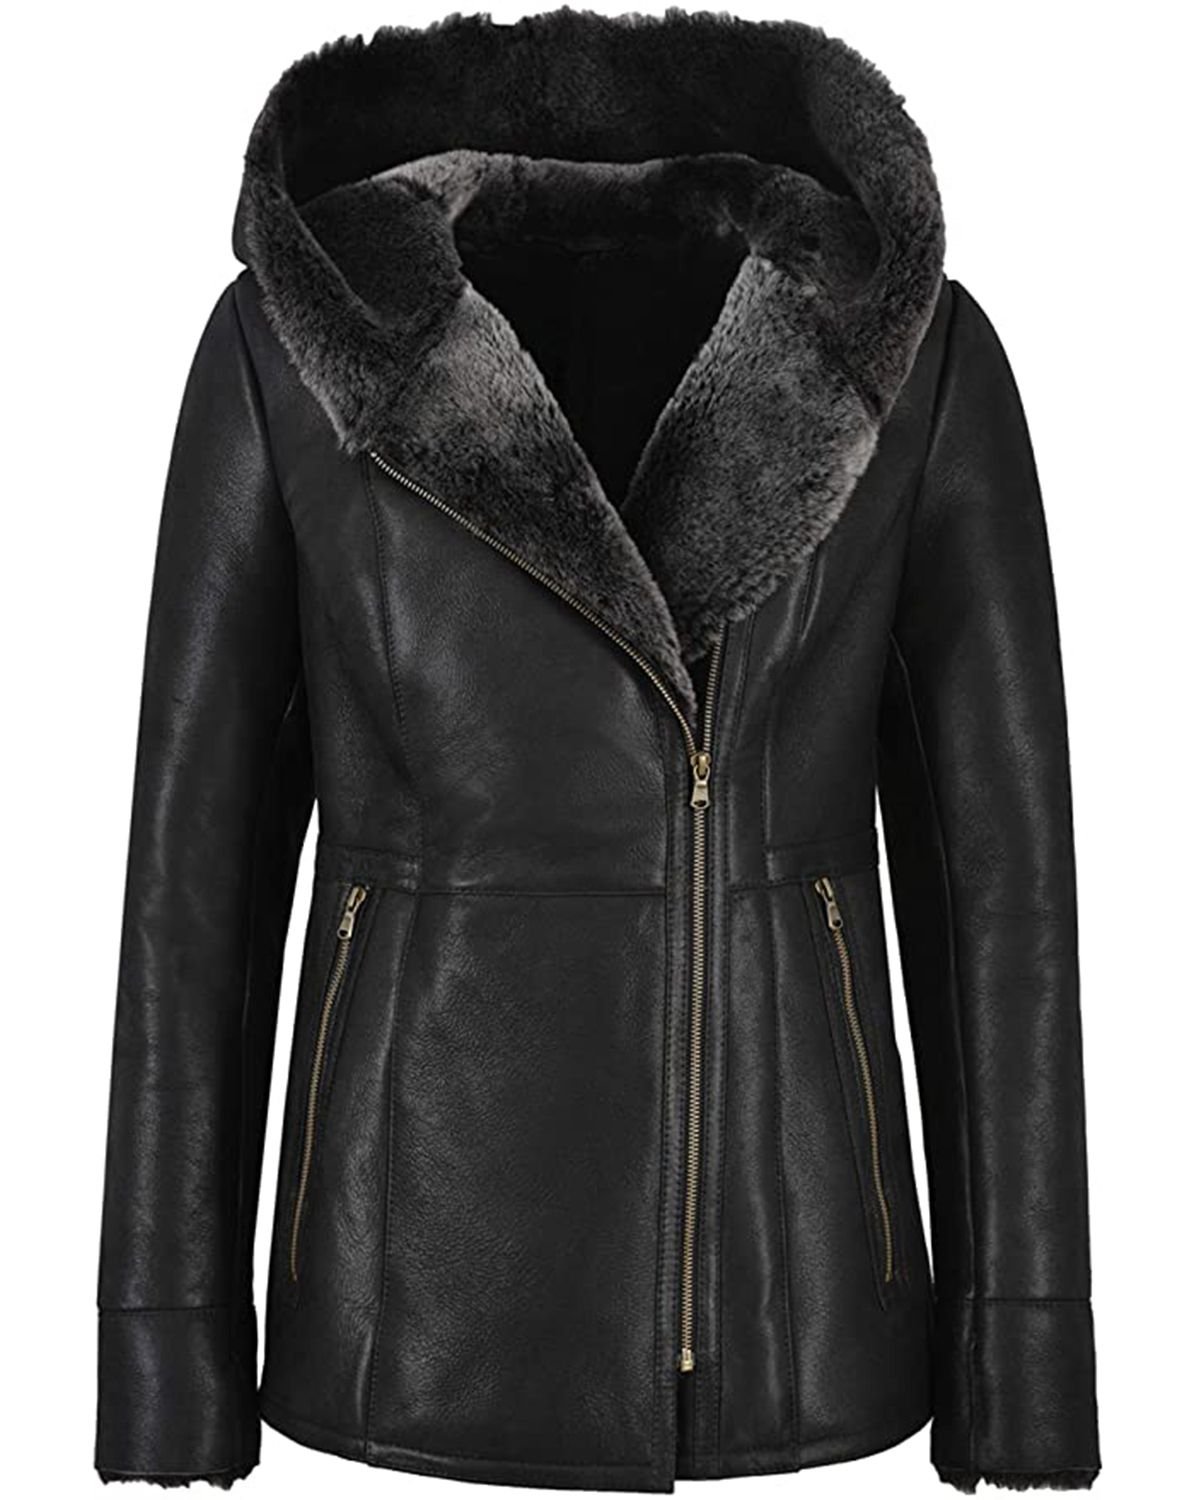 Fur Shearling Bomber Long Jacket for Women